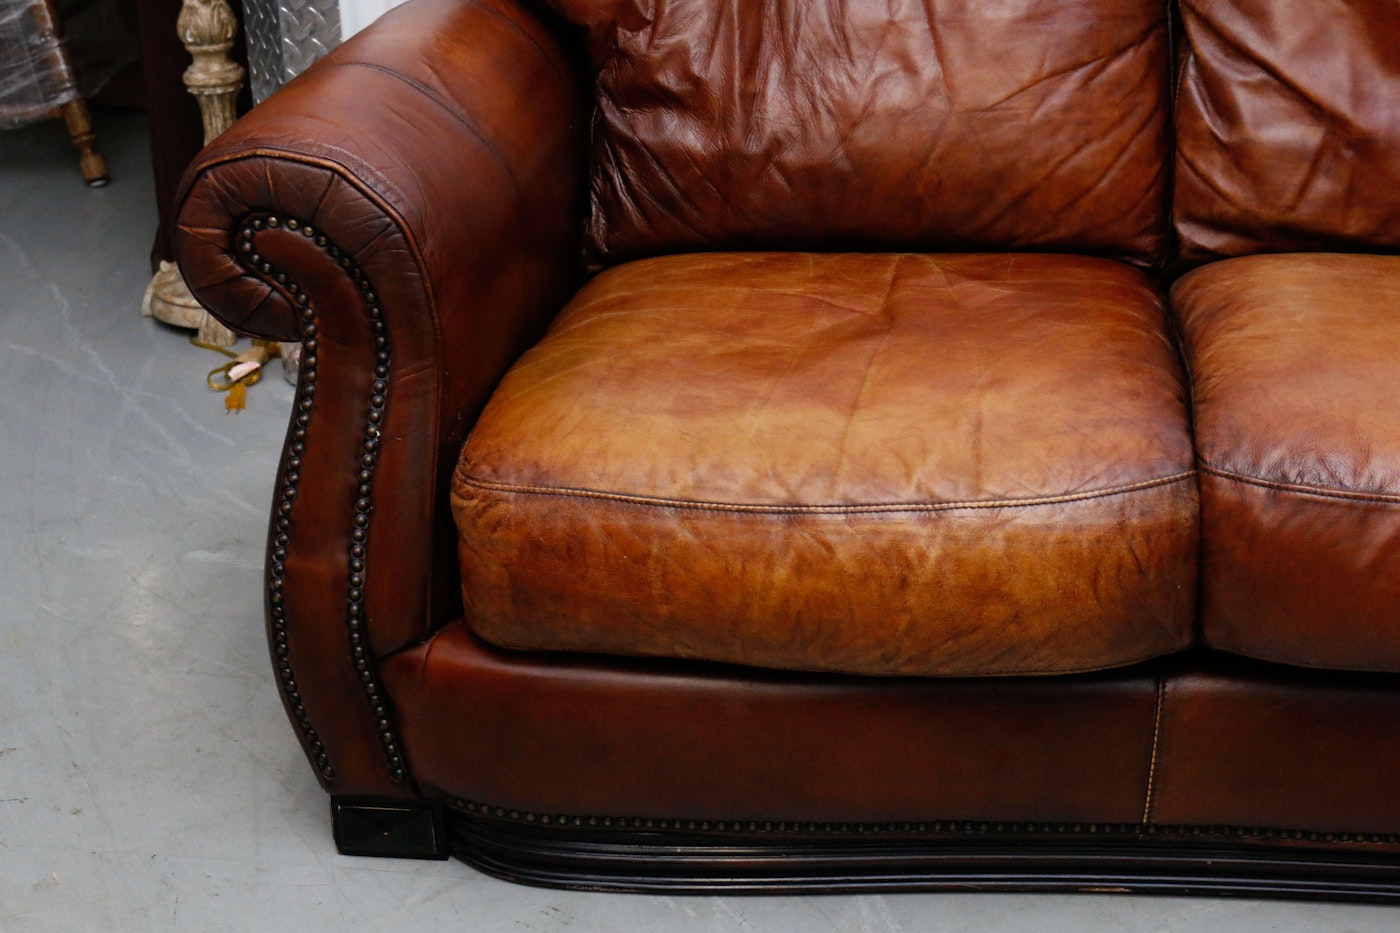 havertys leather sofa quality